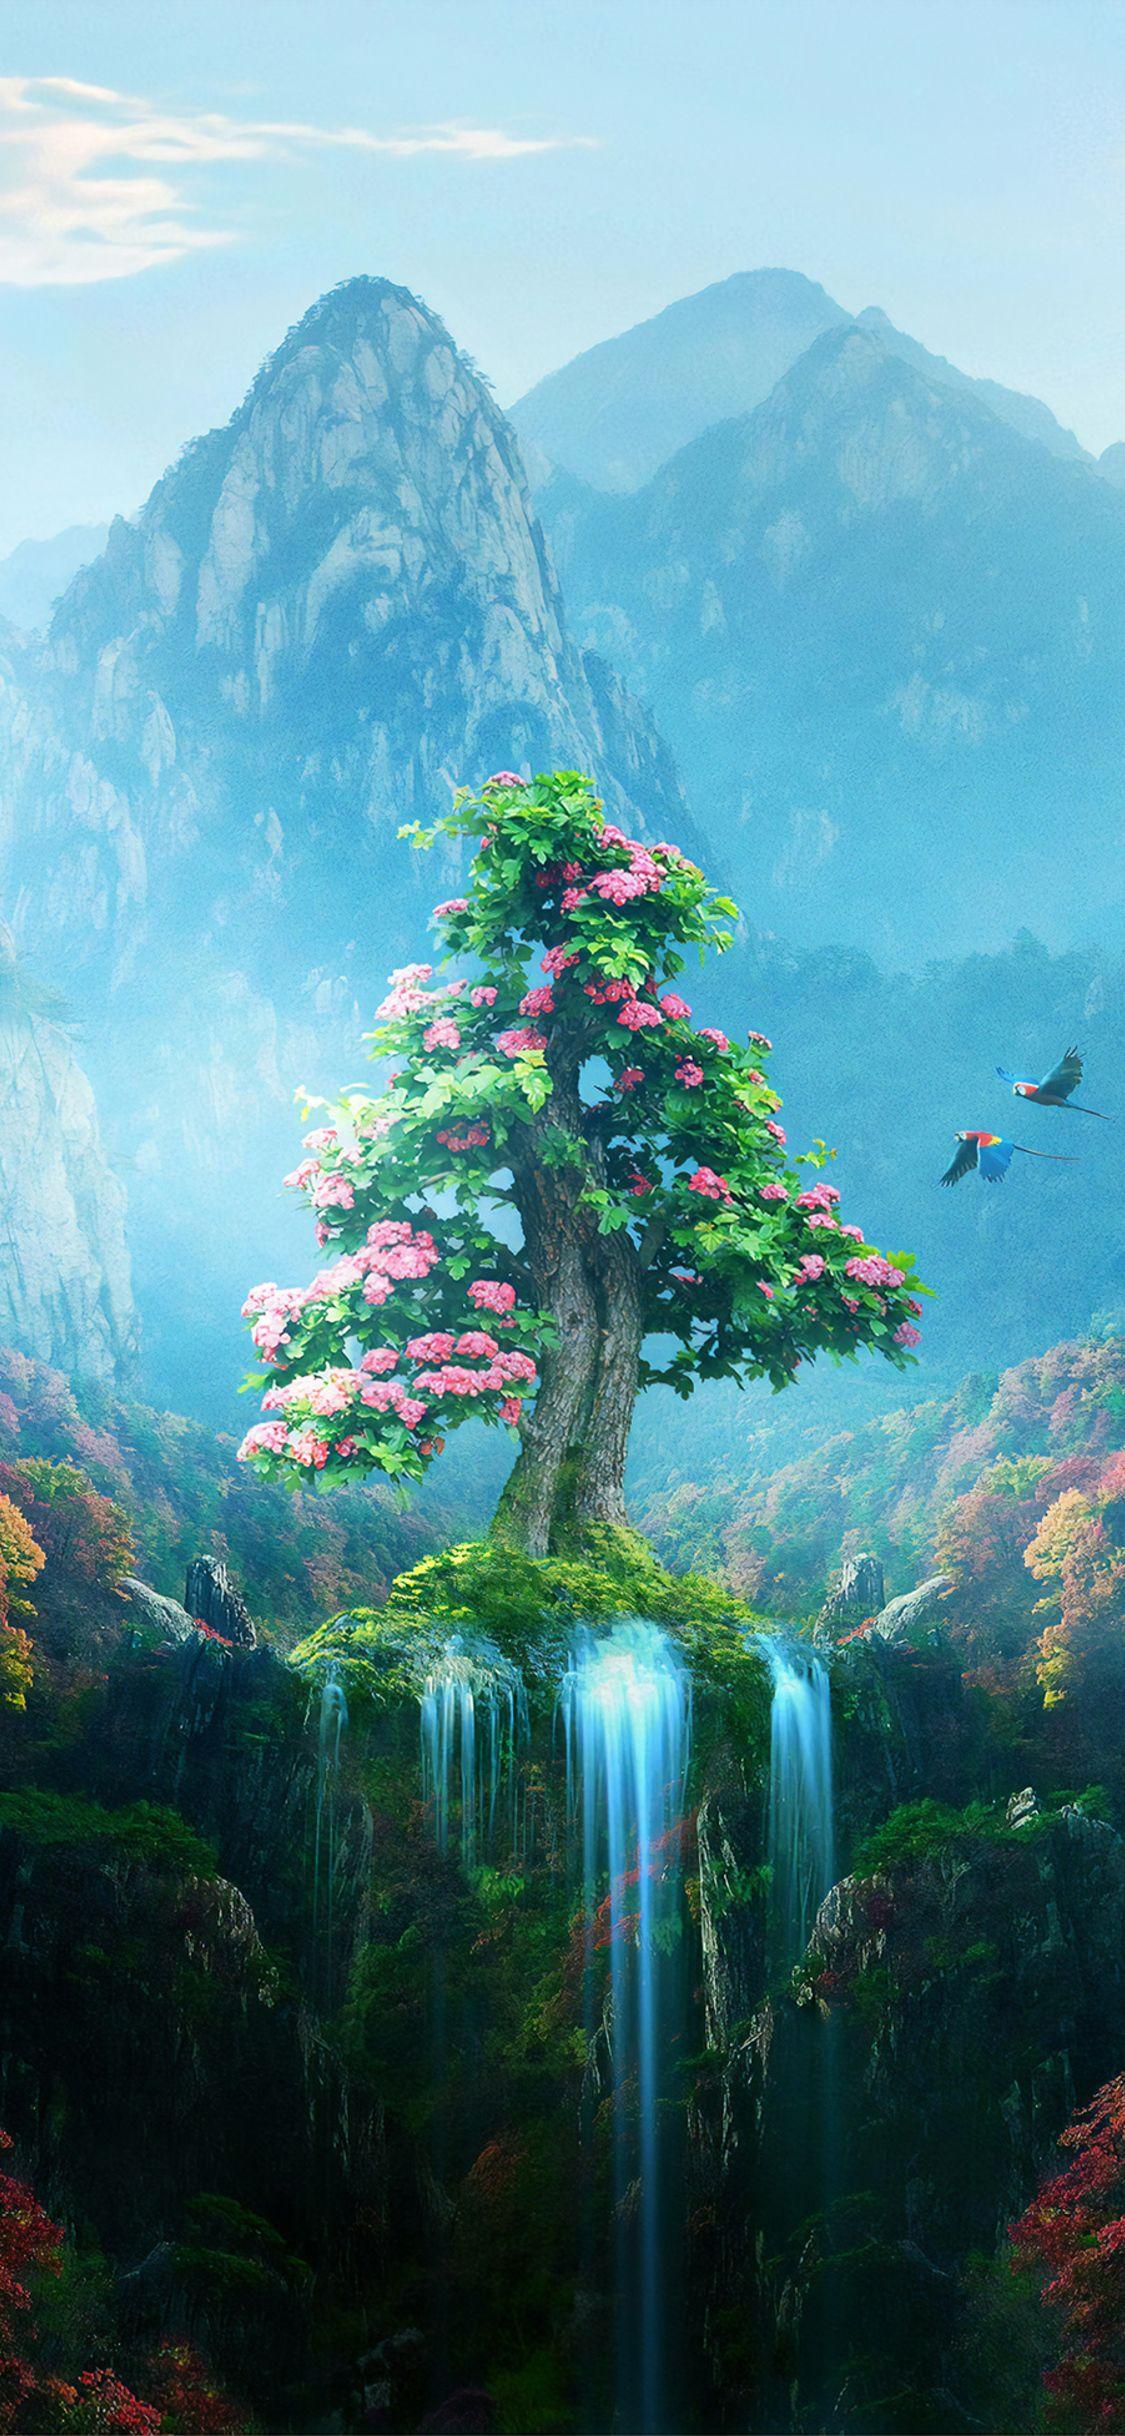 4K Nature iPhone Wallpapers - Top Những Hình Ảnh Đẹp